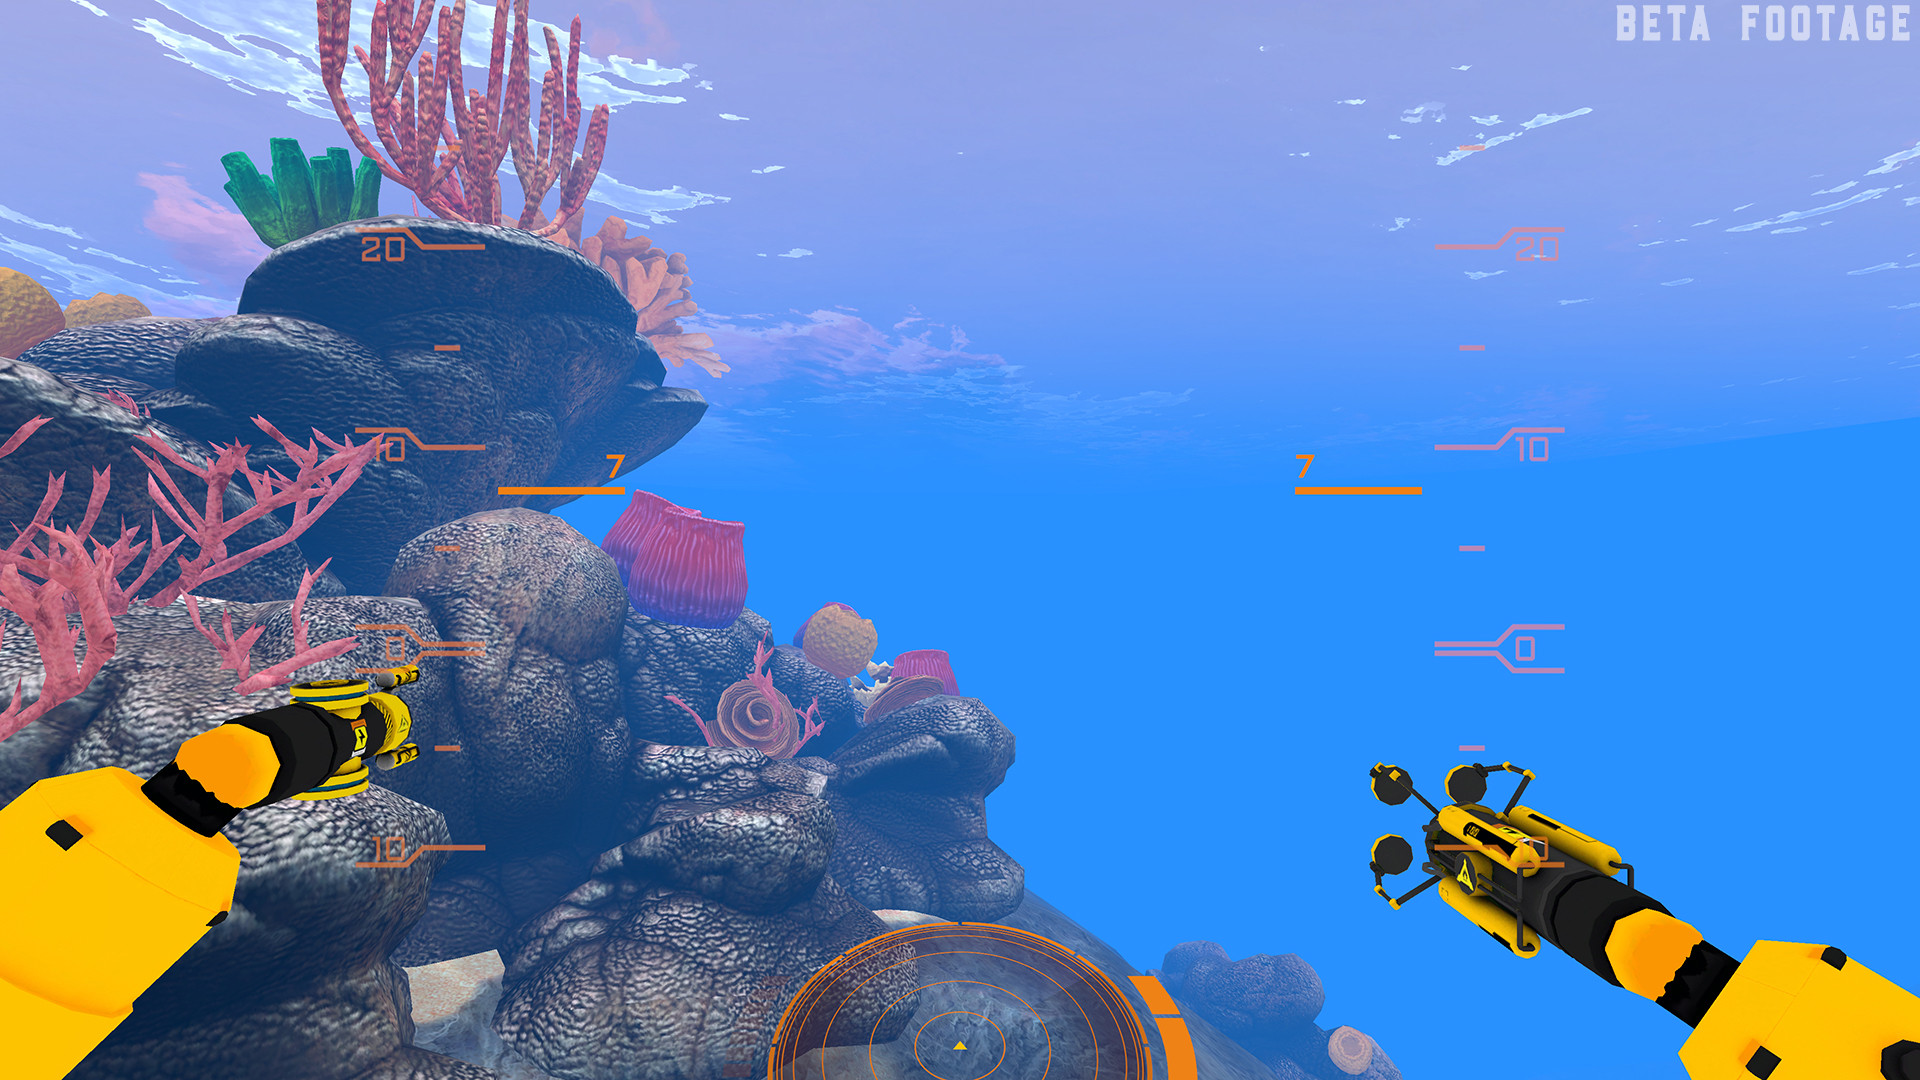 Oculus Quest 游戏《海洋之下》The Great Ocean